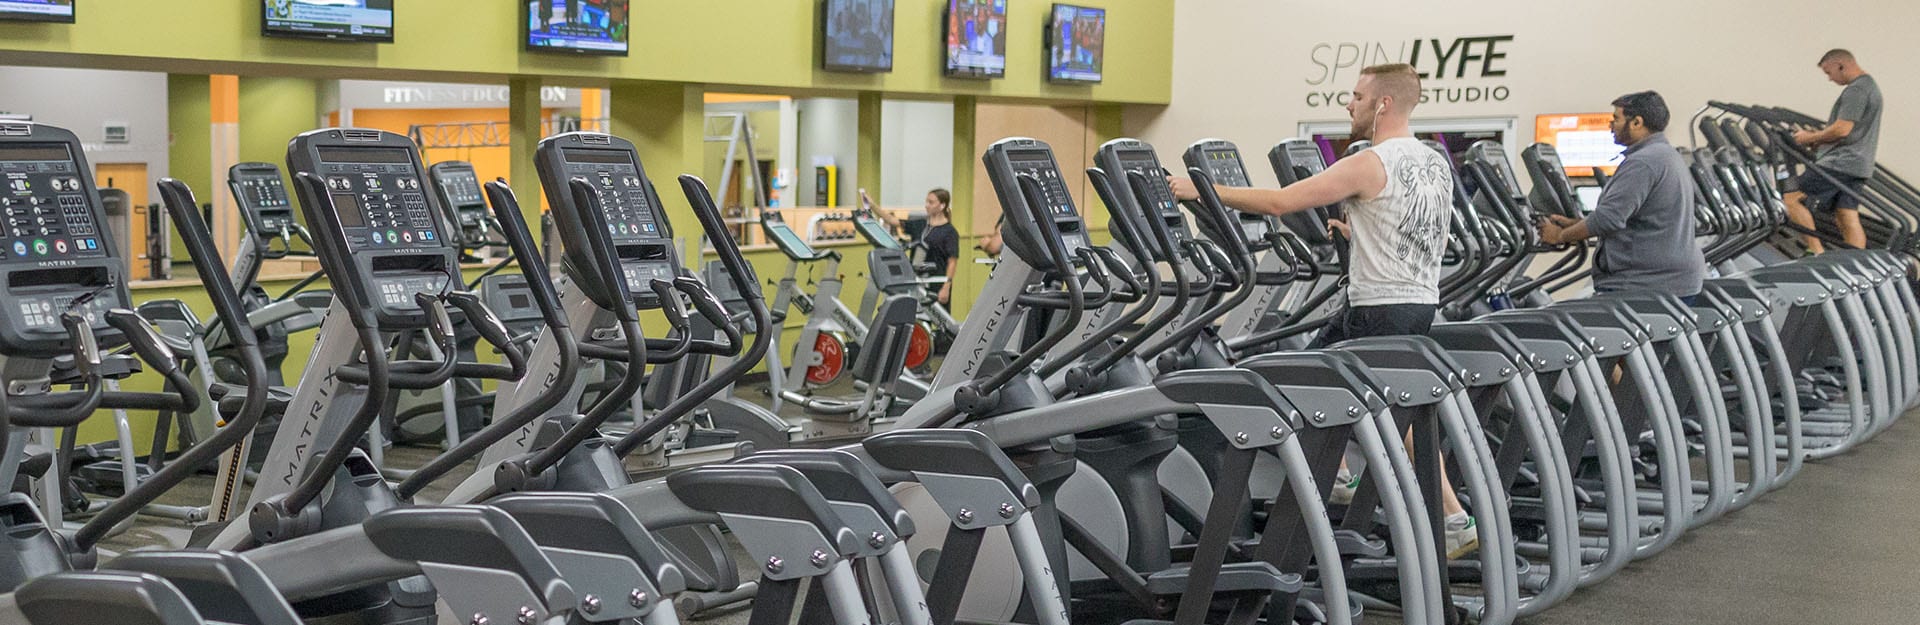 cardio machines on spacious gym floor